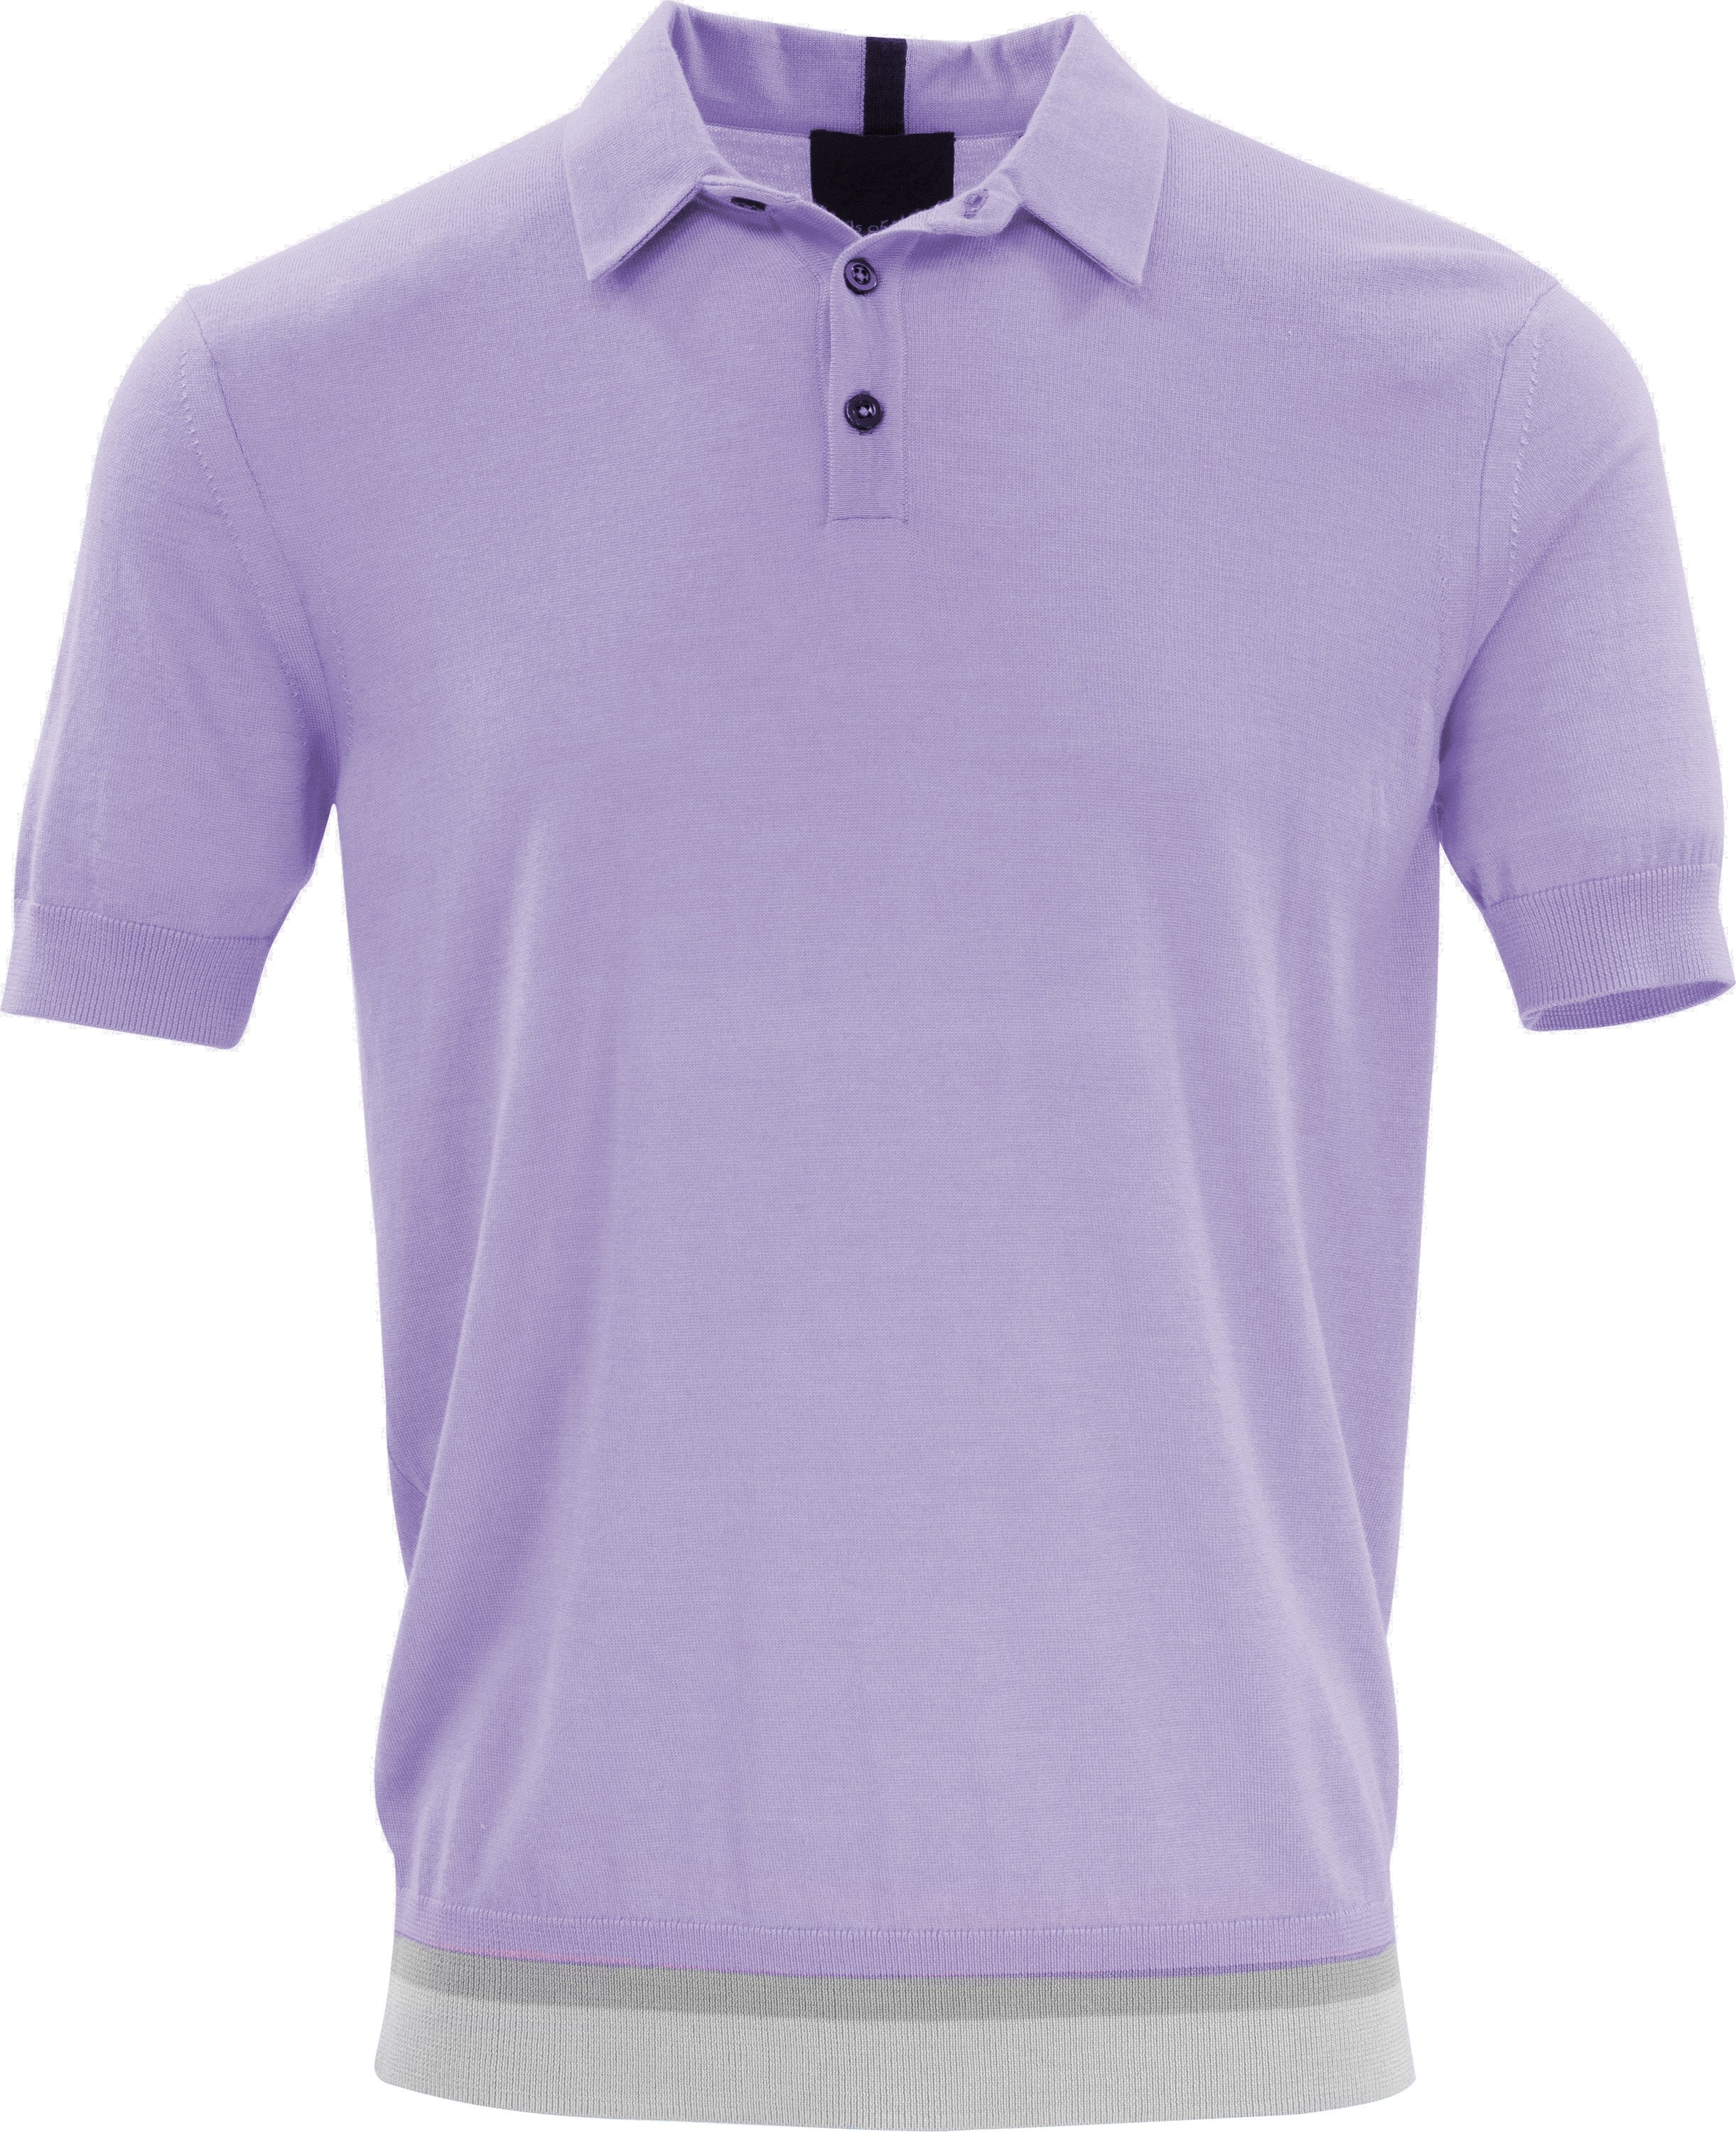 Men’s Pink / Purple Pilgrim Polo Shirt - Lavender Small Lords of Harlech